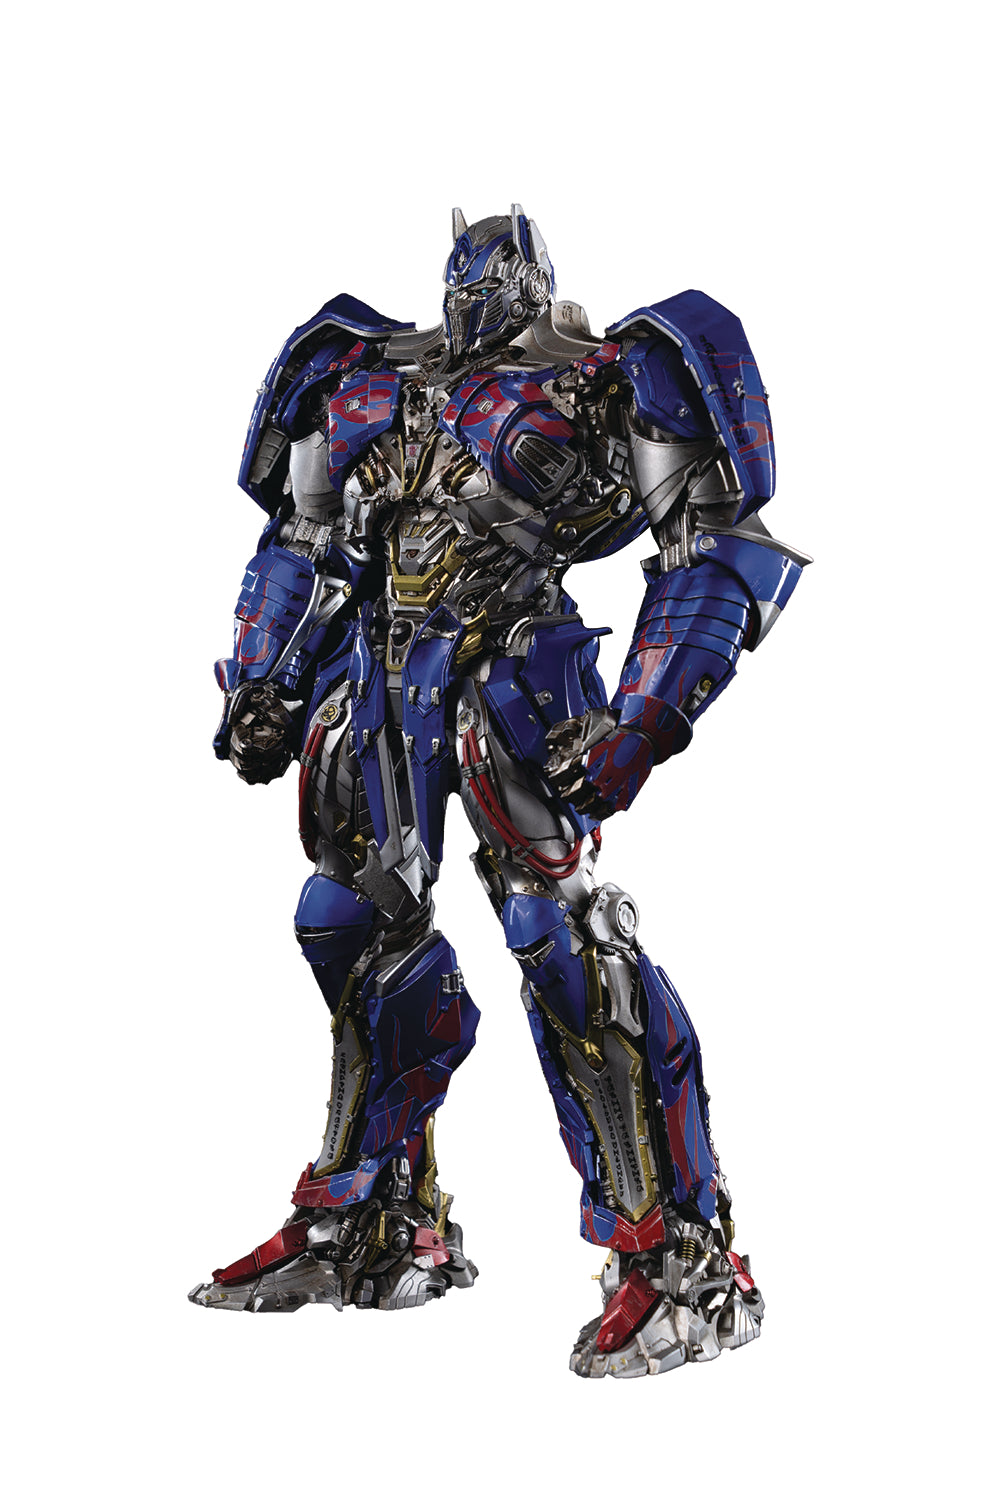 Transformers: The Last Knight DLX Optimus Prime